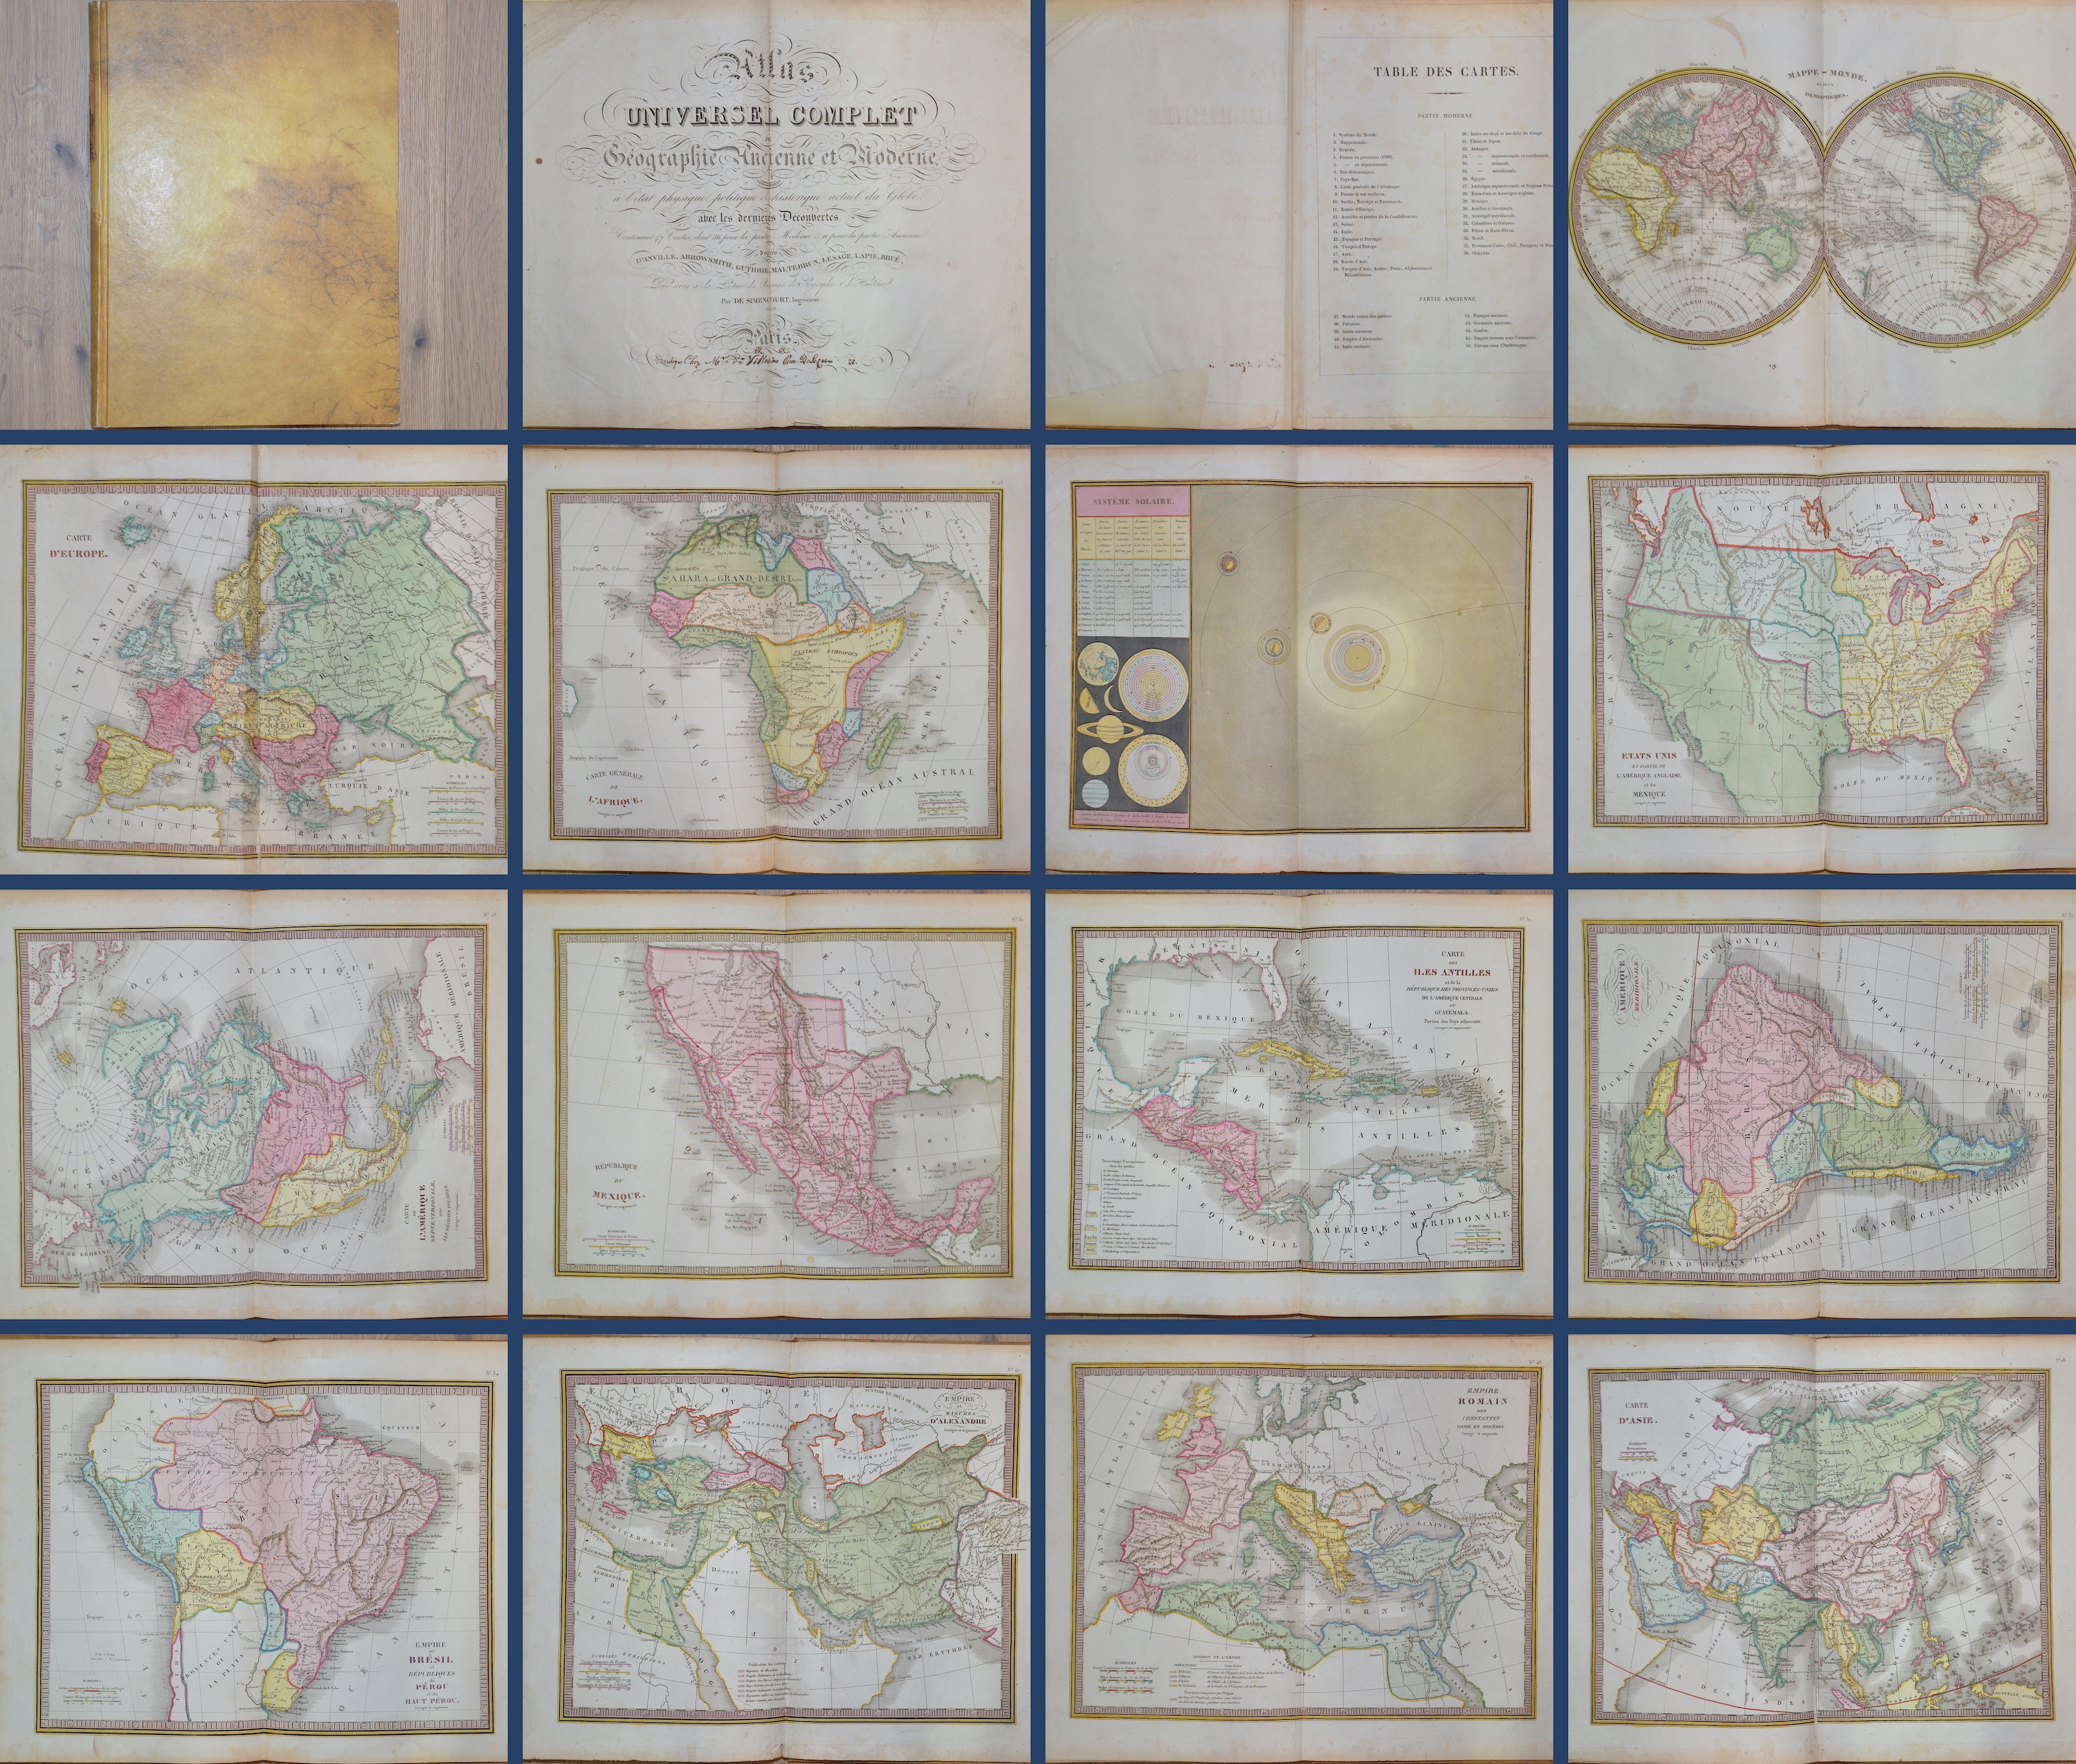 Arrowsmith  Atlas Universel Complet Geographie Ancienne et Moderne,